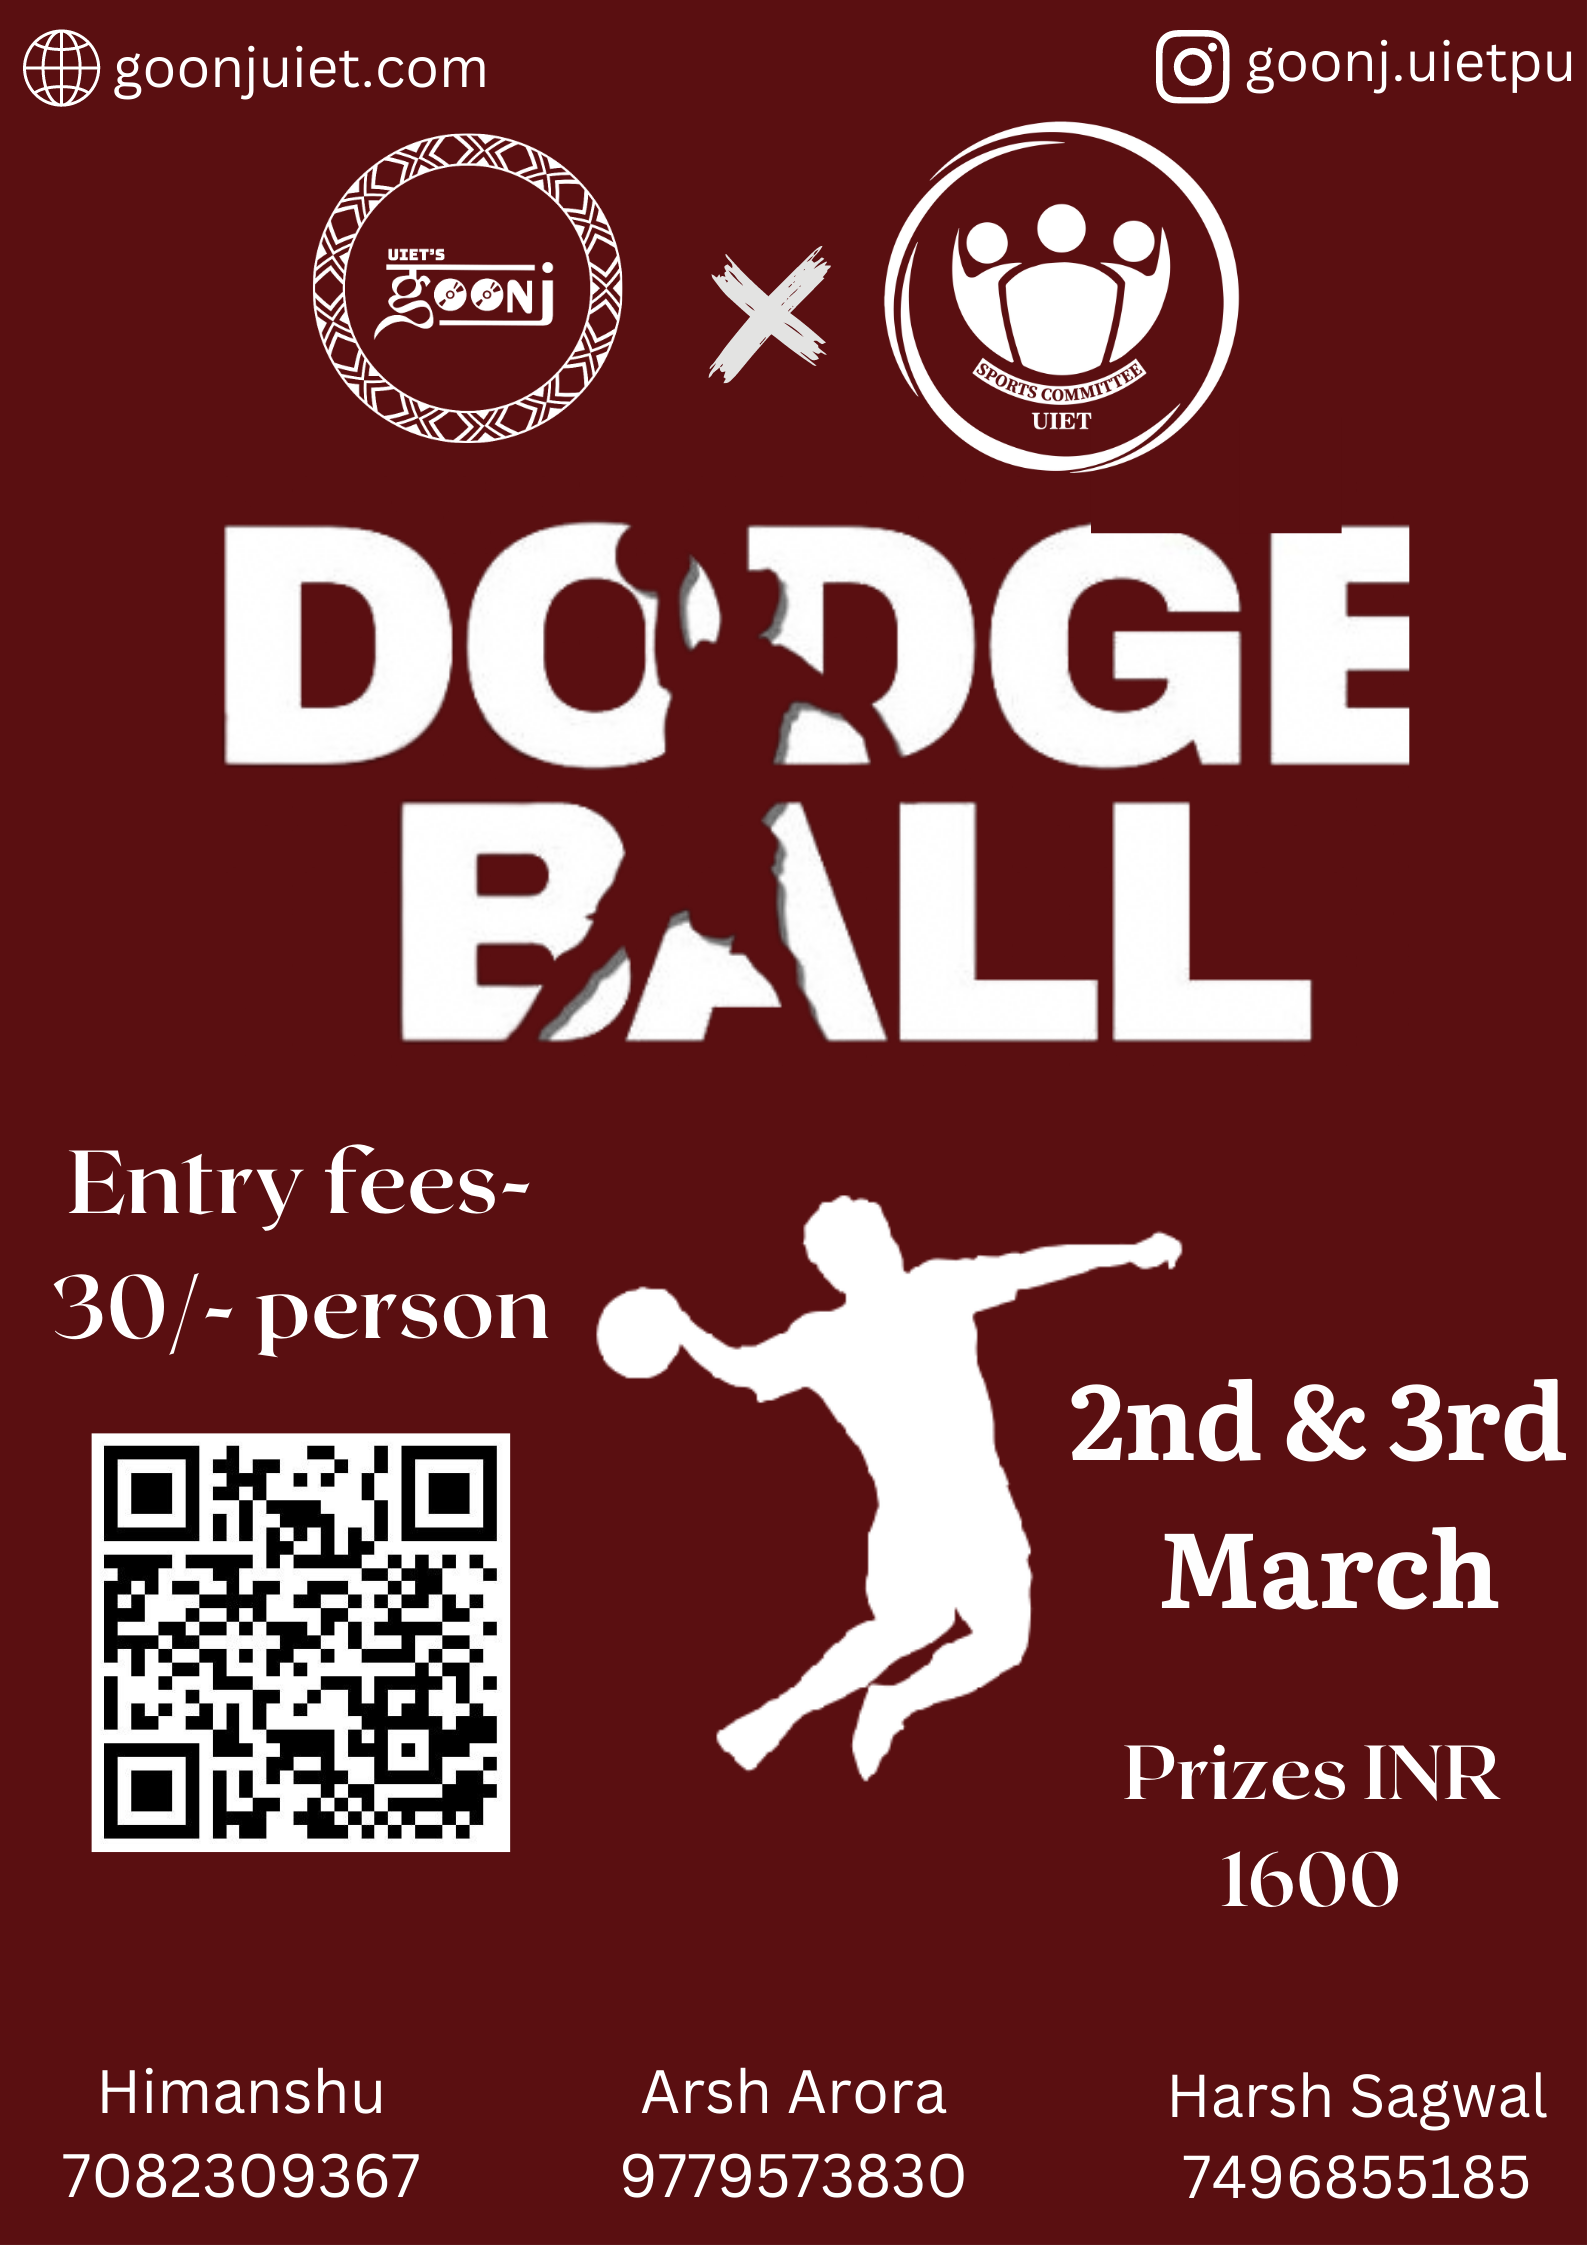 DODGE BALL